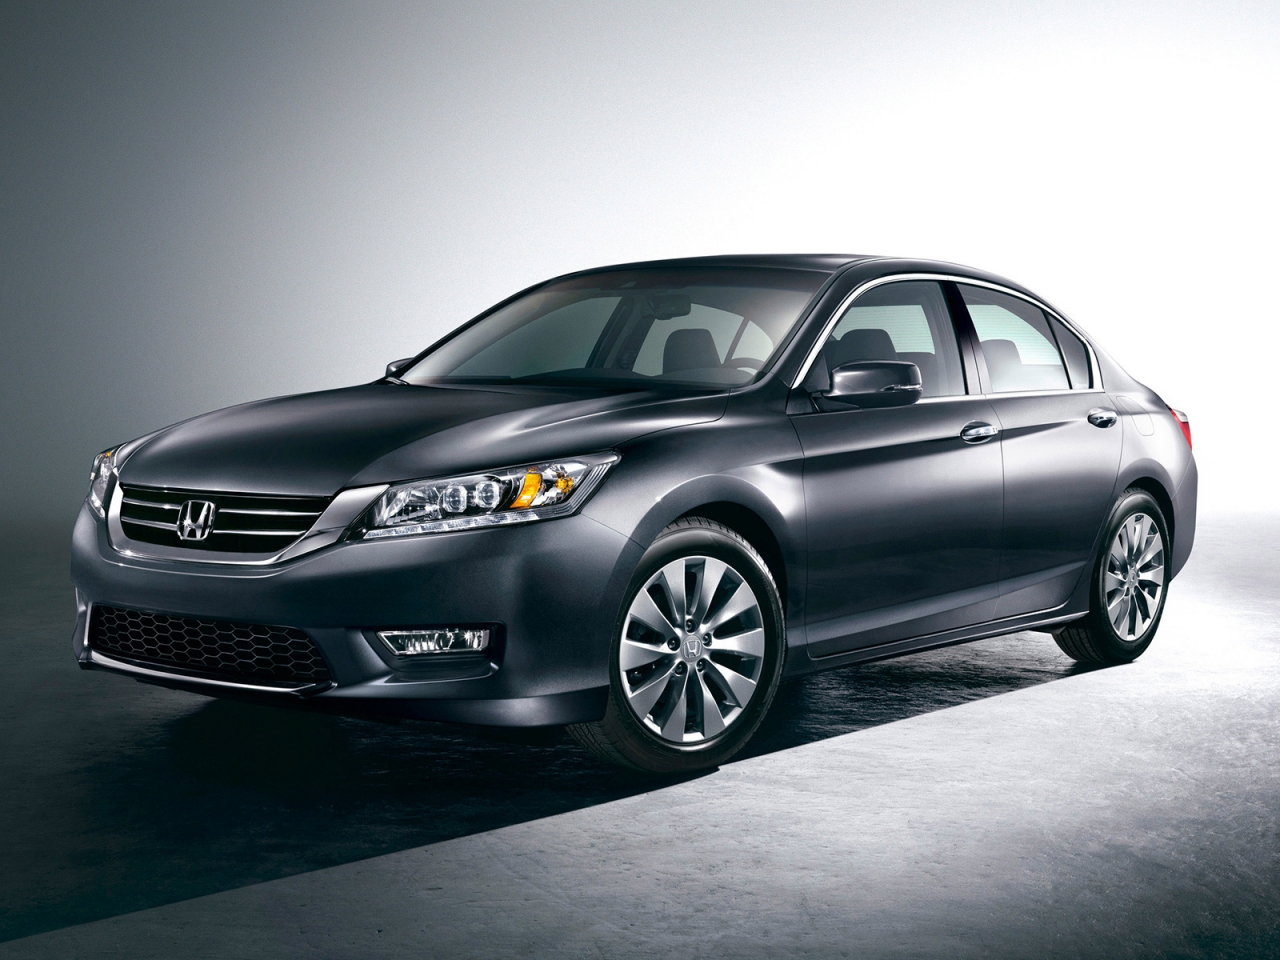 2013 Honda Accord for 1280 x 960 resolution